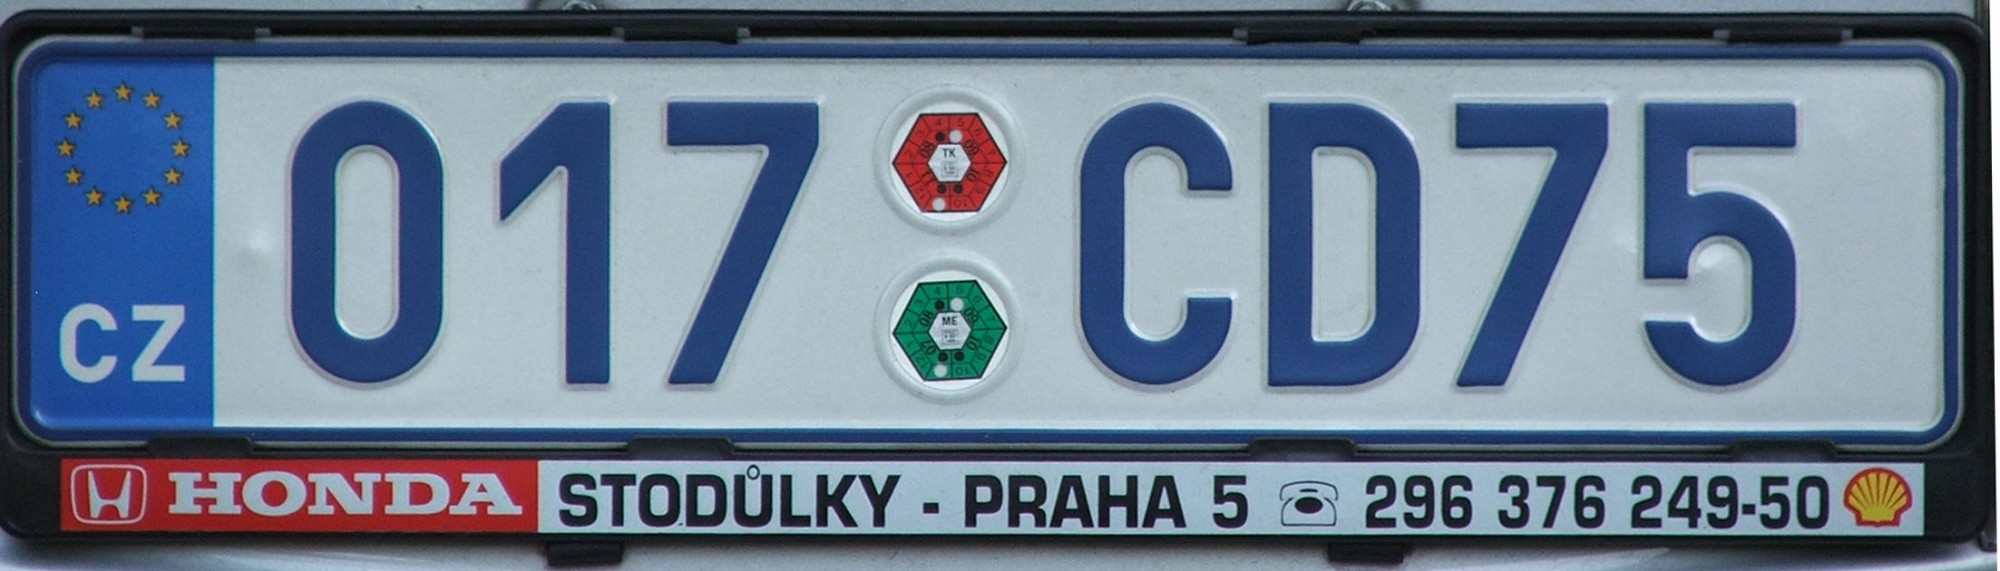 Czech diplomatic spz2134